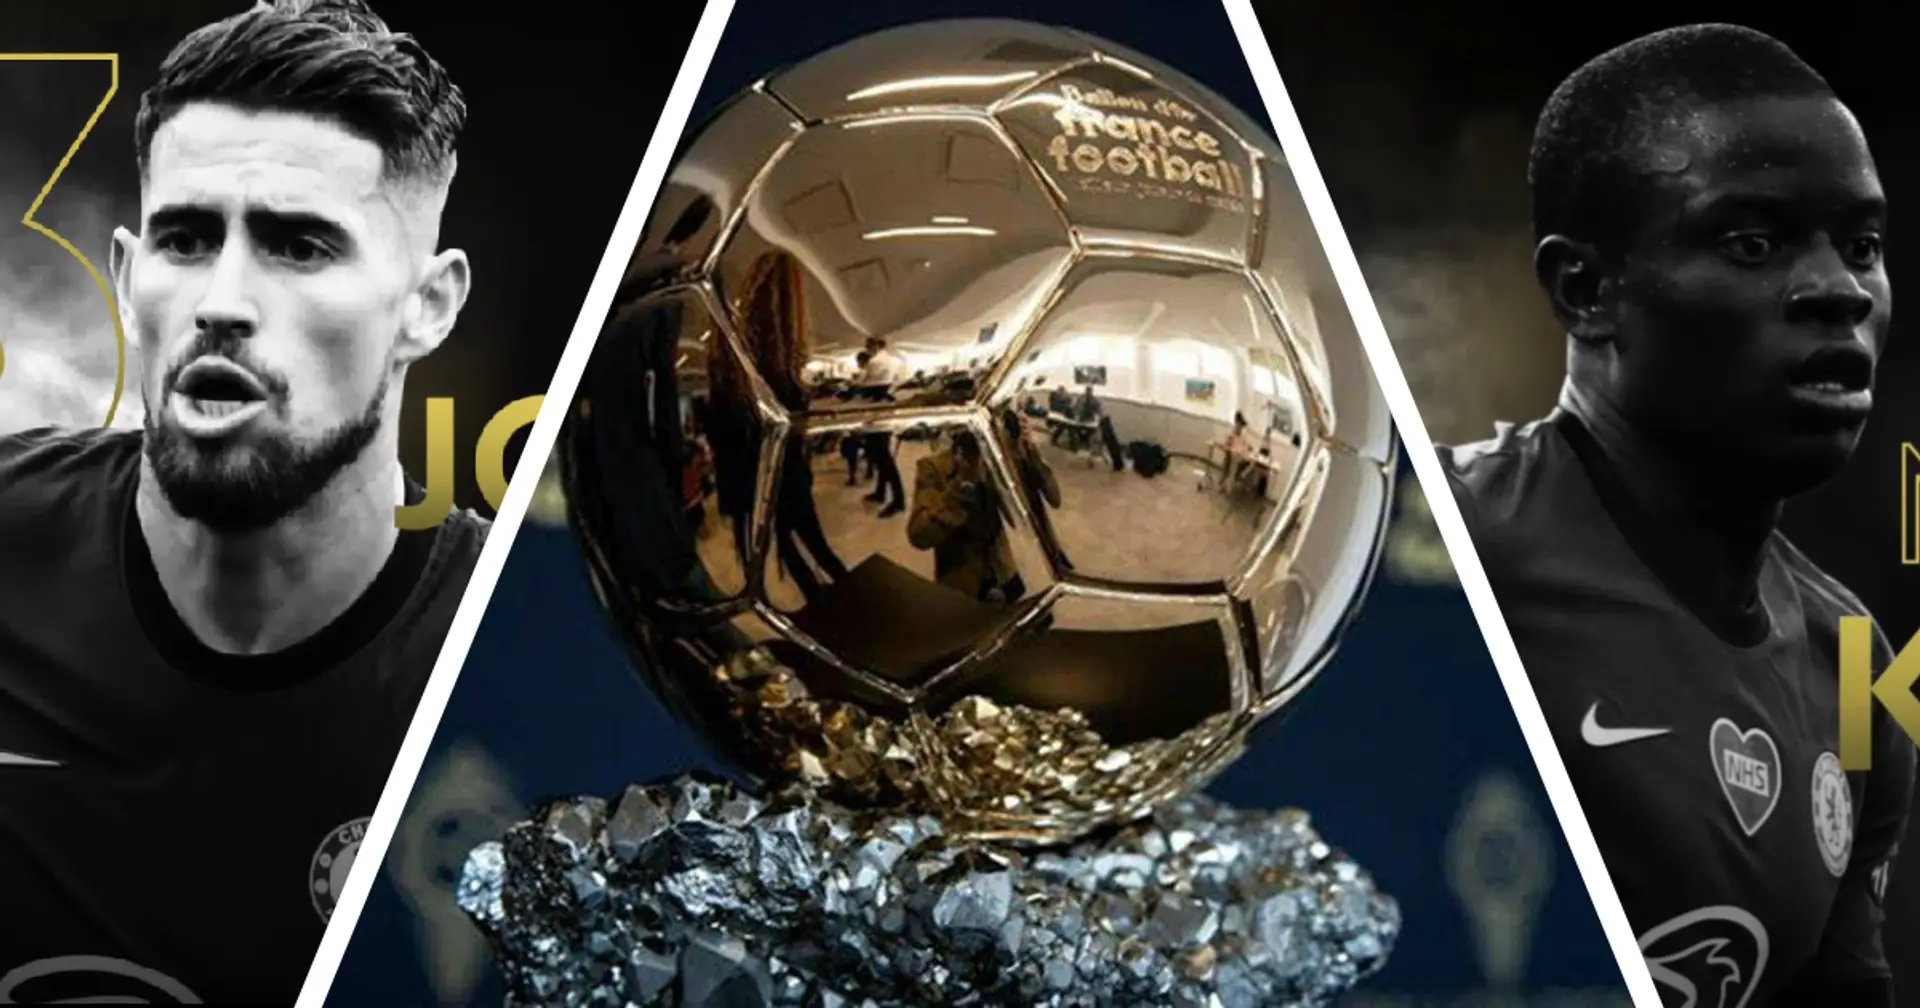 Ballon d'Or: Jorginho 3rd, Kante 5th, Lukaku 12th, Mount 19th & Azpilicueta 29th on final list of top 30